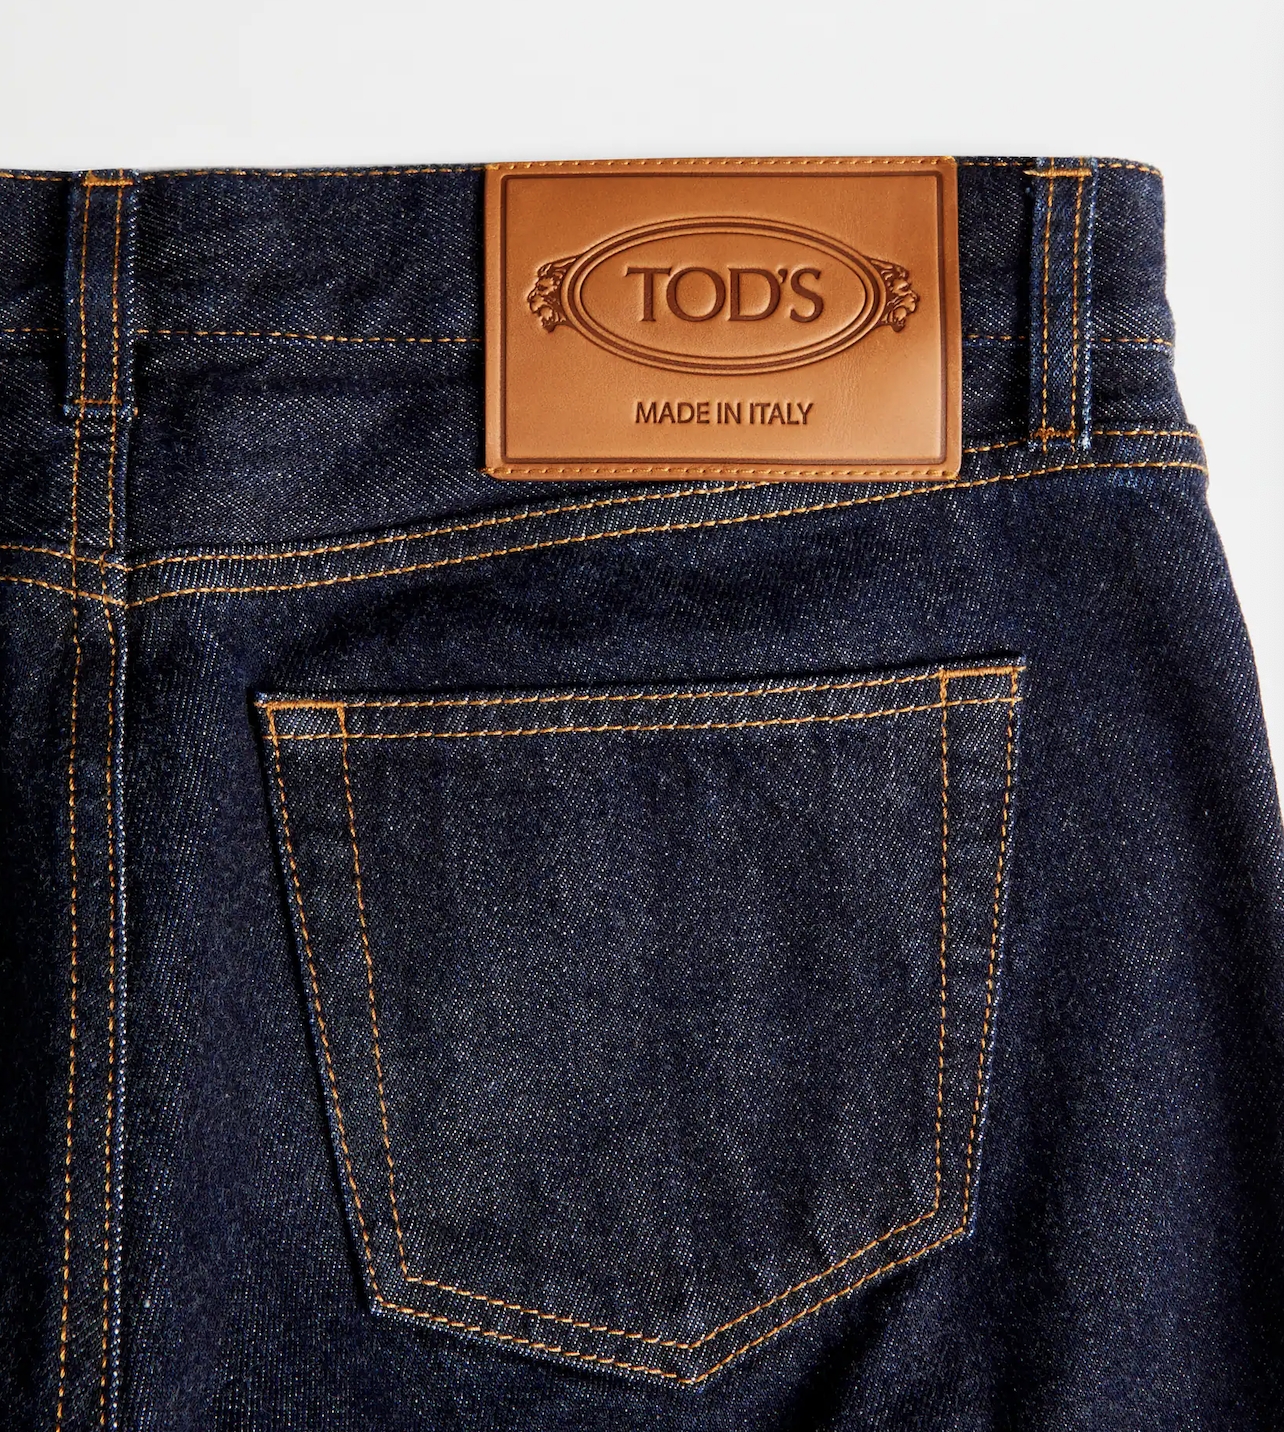 Tod's 5 Pocket Jeans